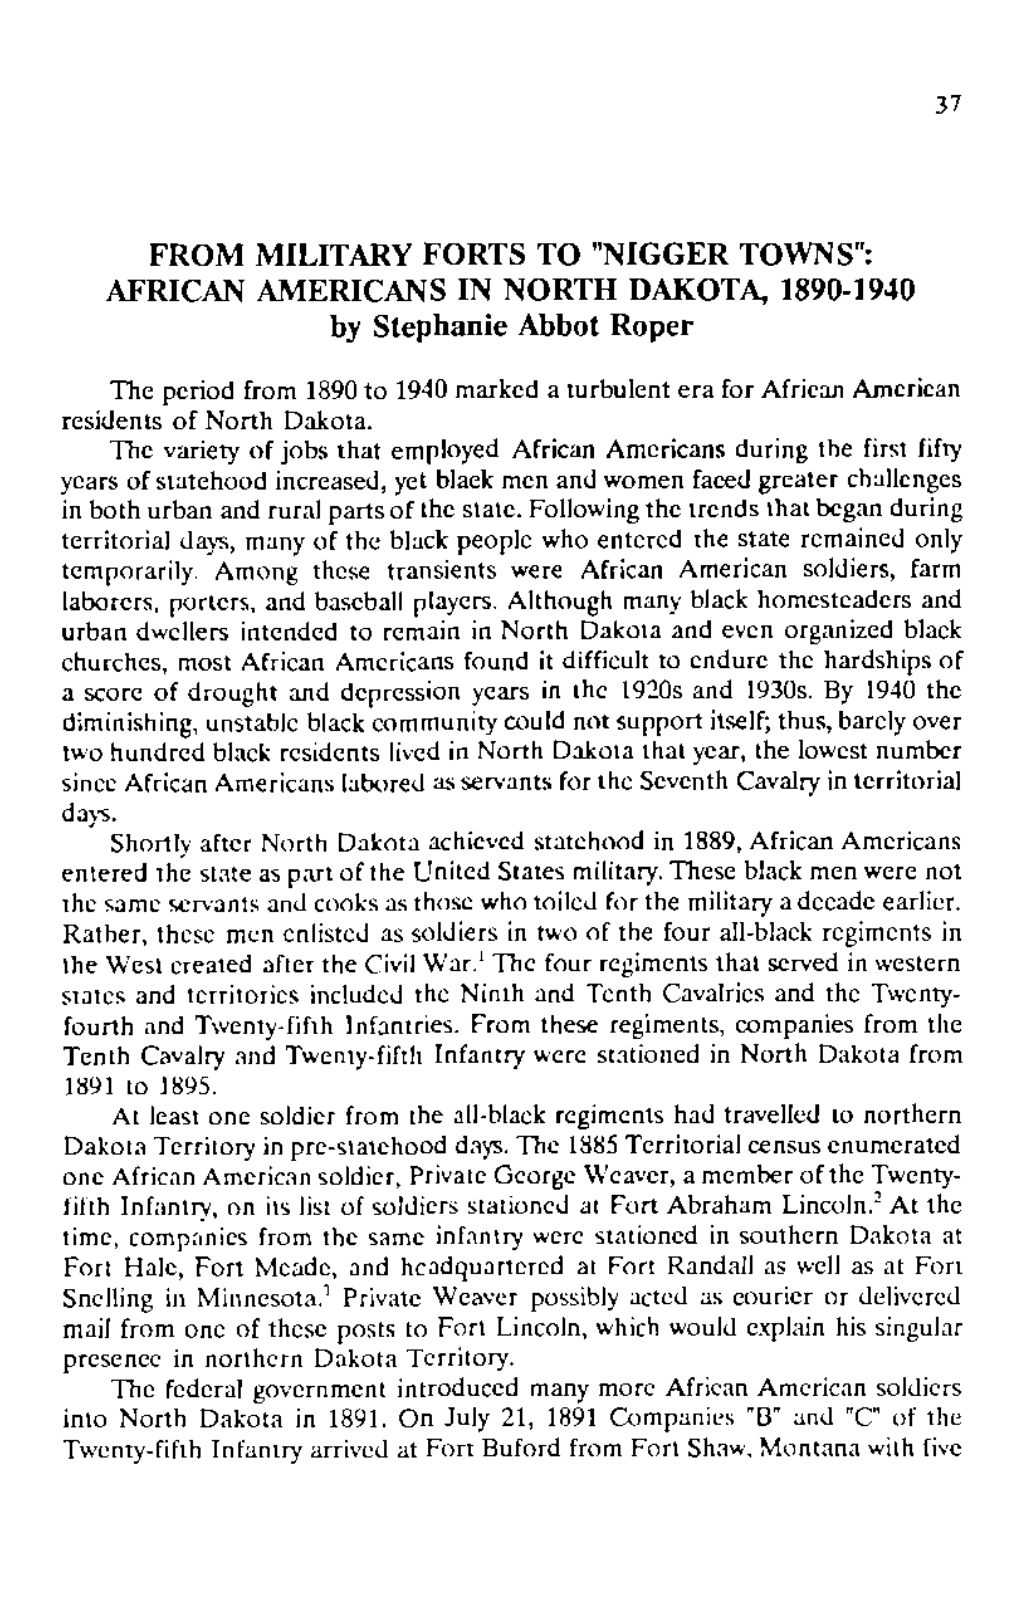 "Nigger Towns": African Americans in North Dakota, 1890-1940